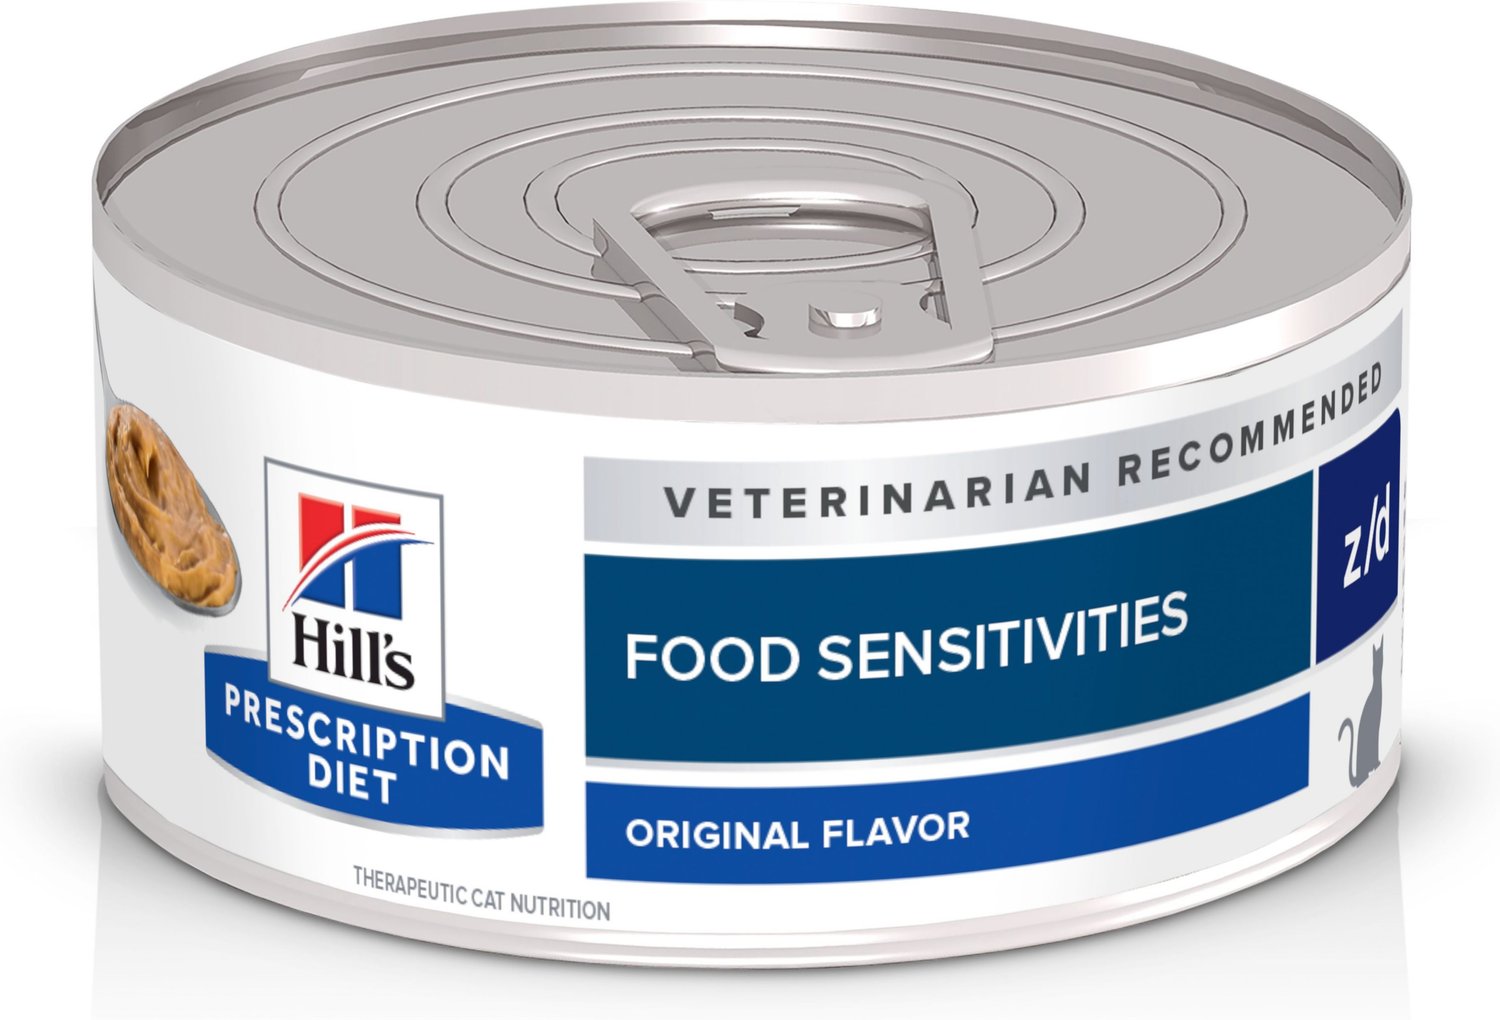 HILL'S PRESCRIPTION z/d Skin/Food Sensitivities Original Flavor Wet Cat Food, 5.5-oz, case of - Chewy.com